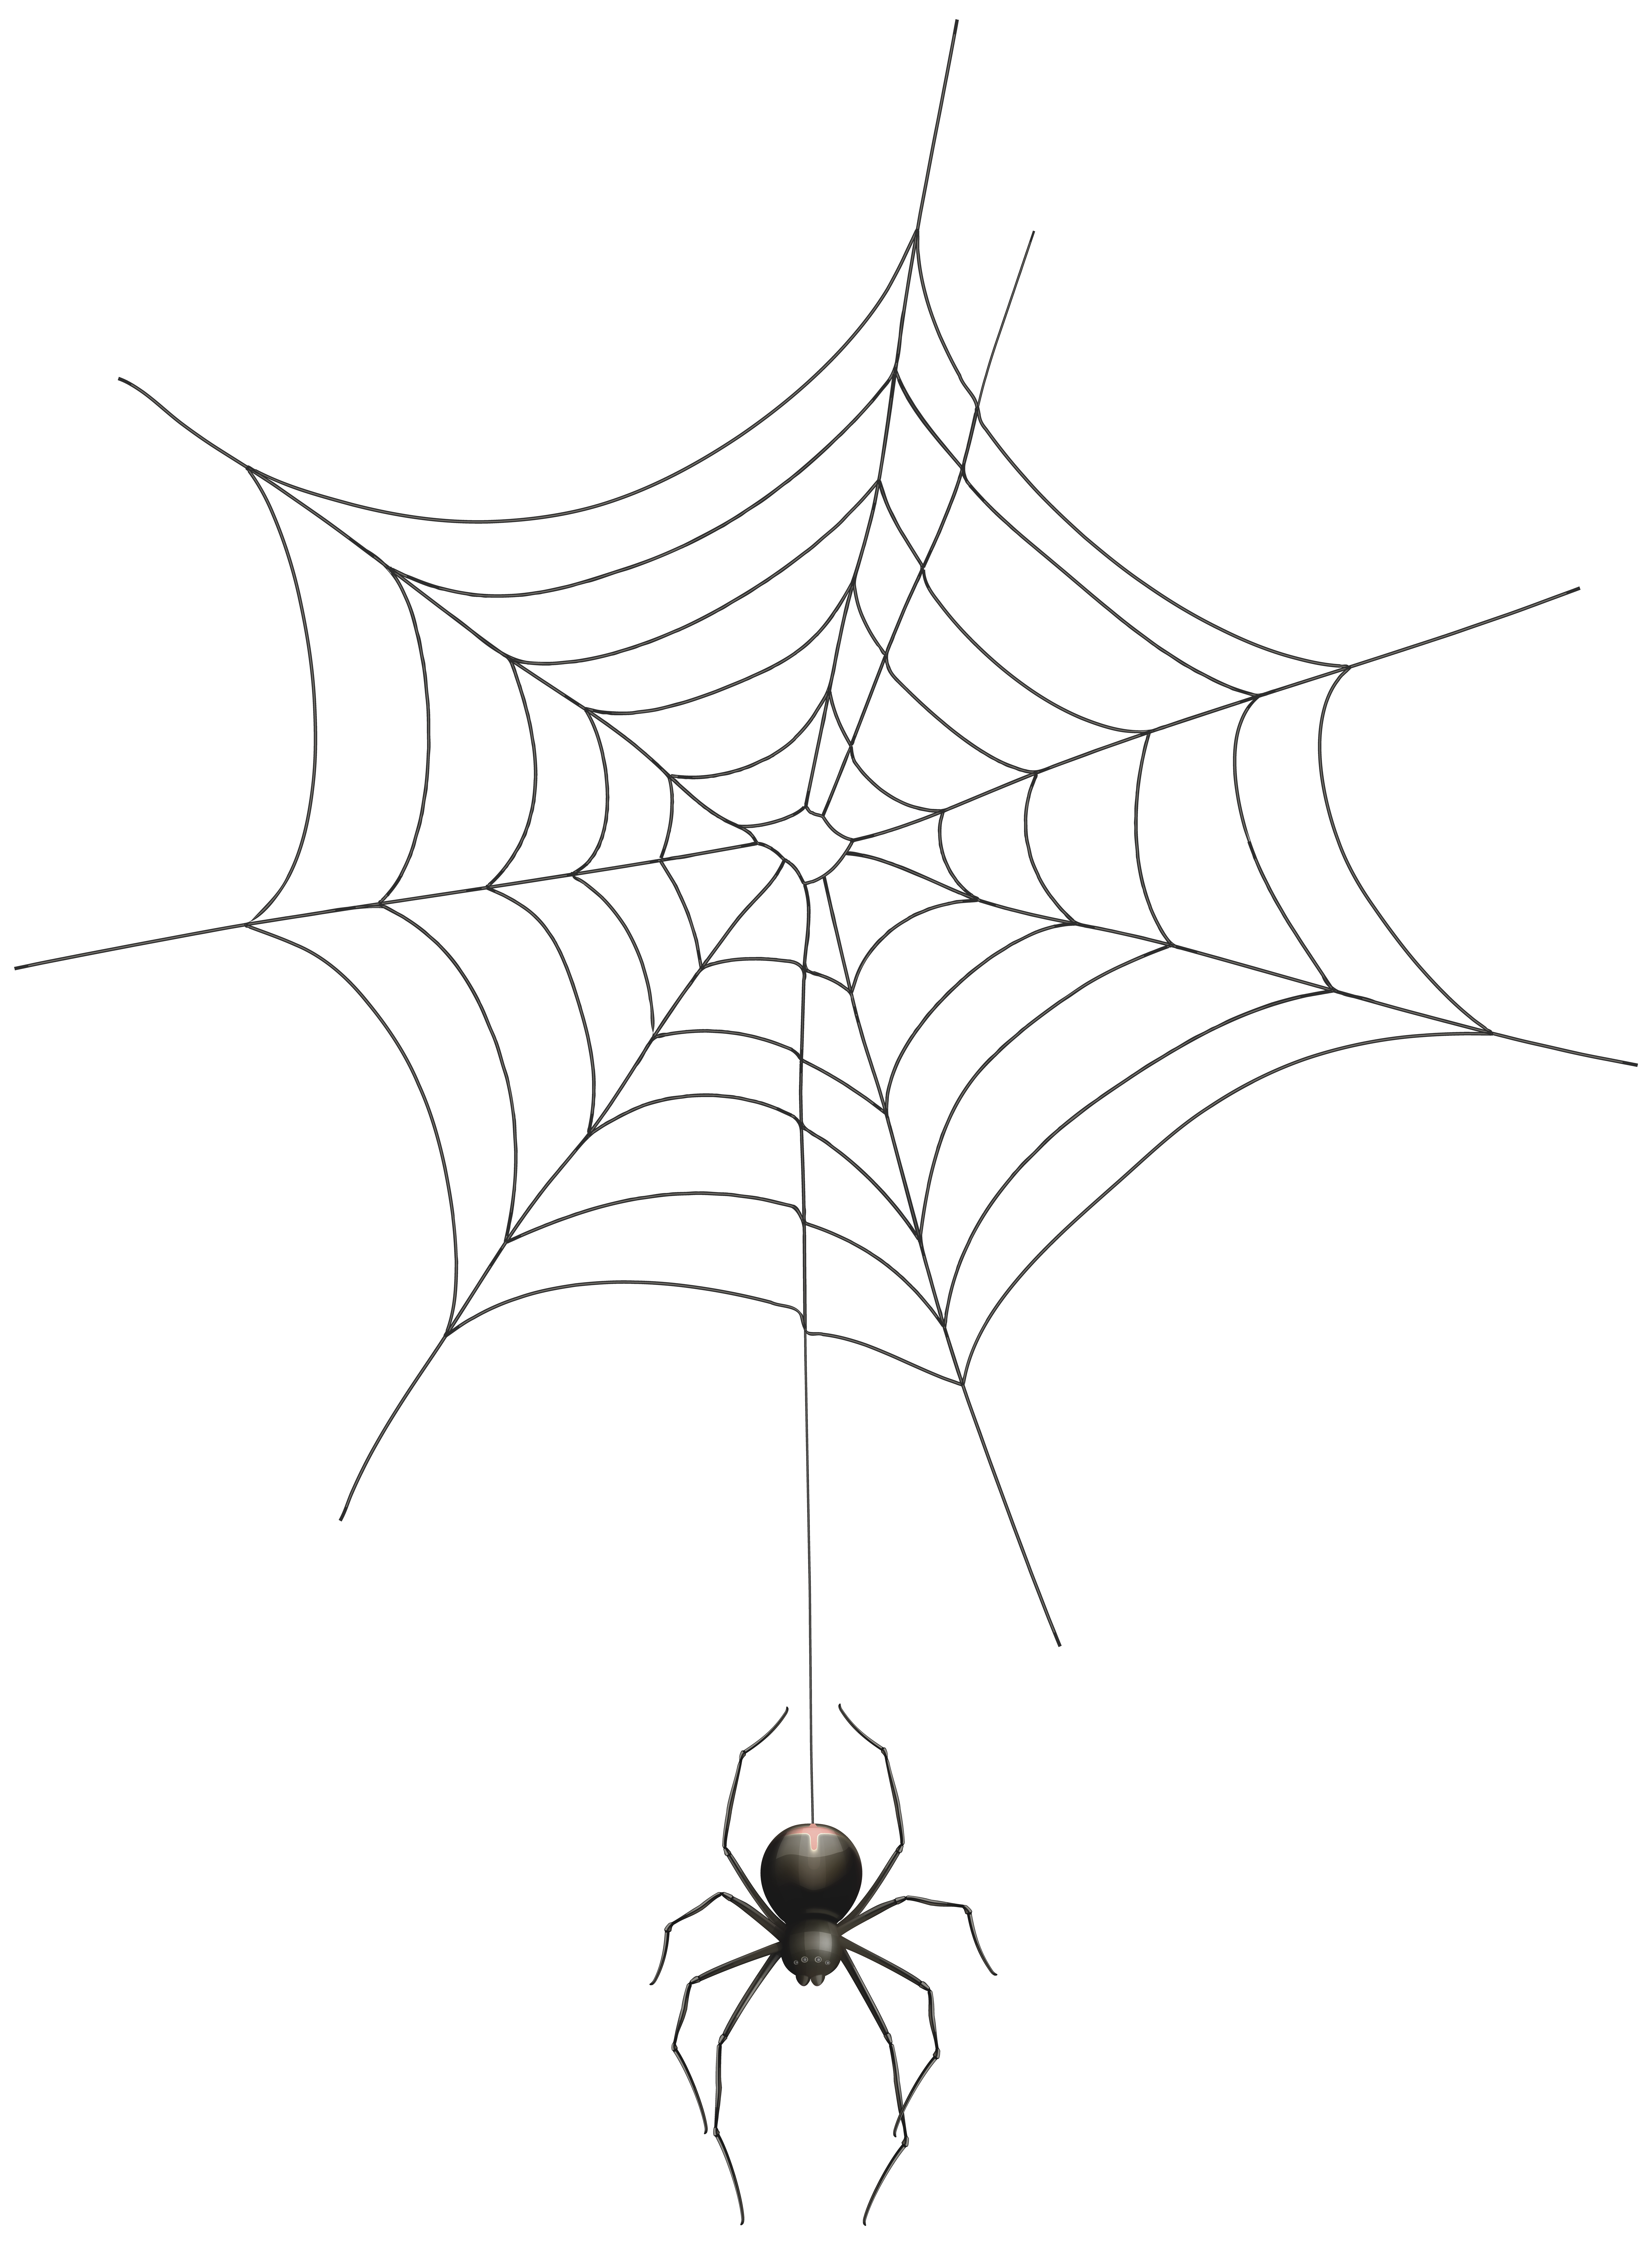 spiderweb clipart spide